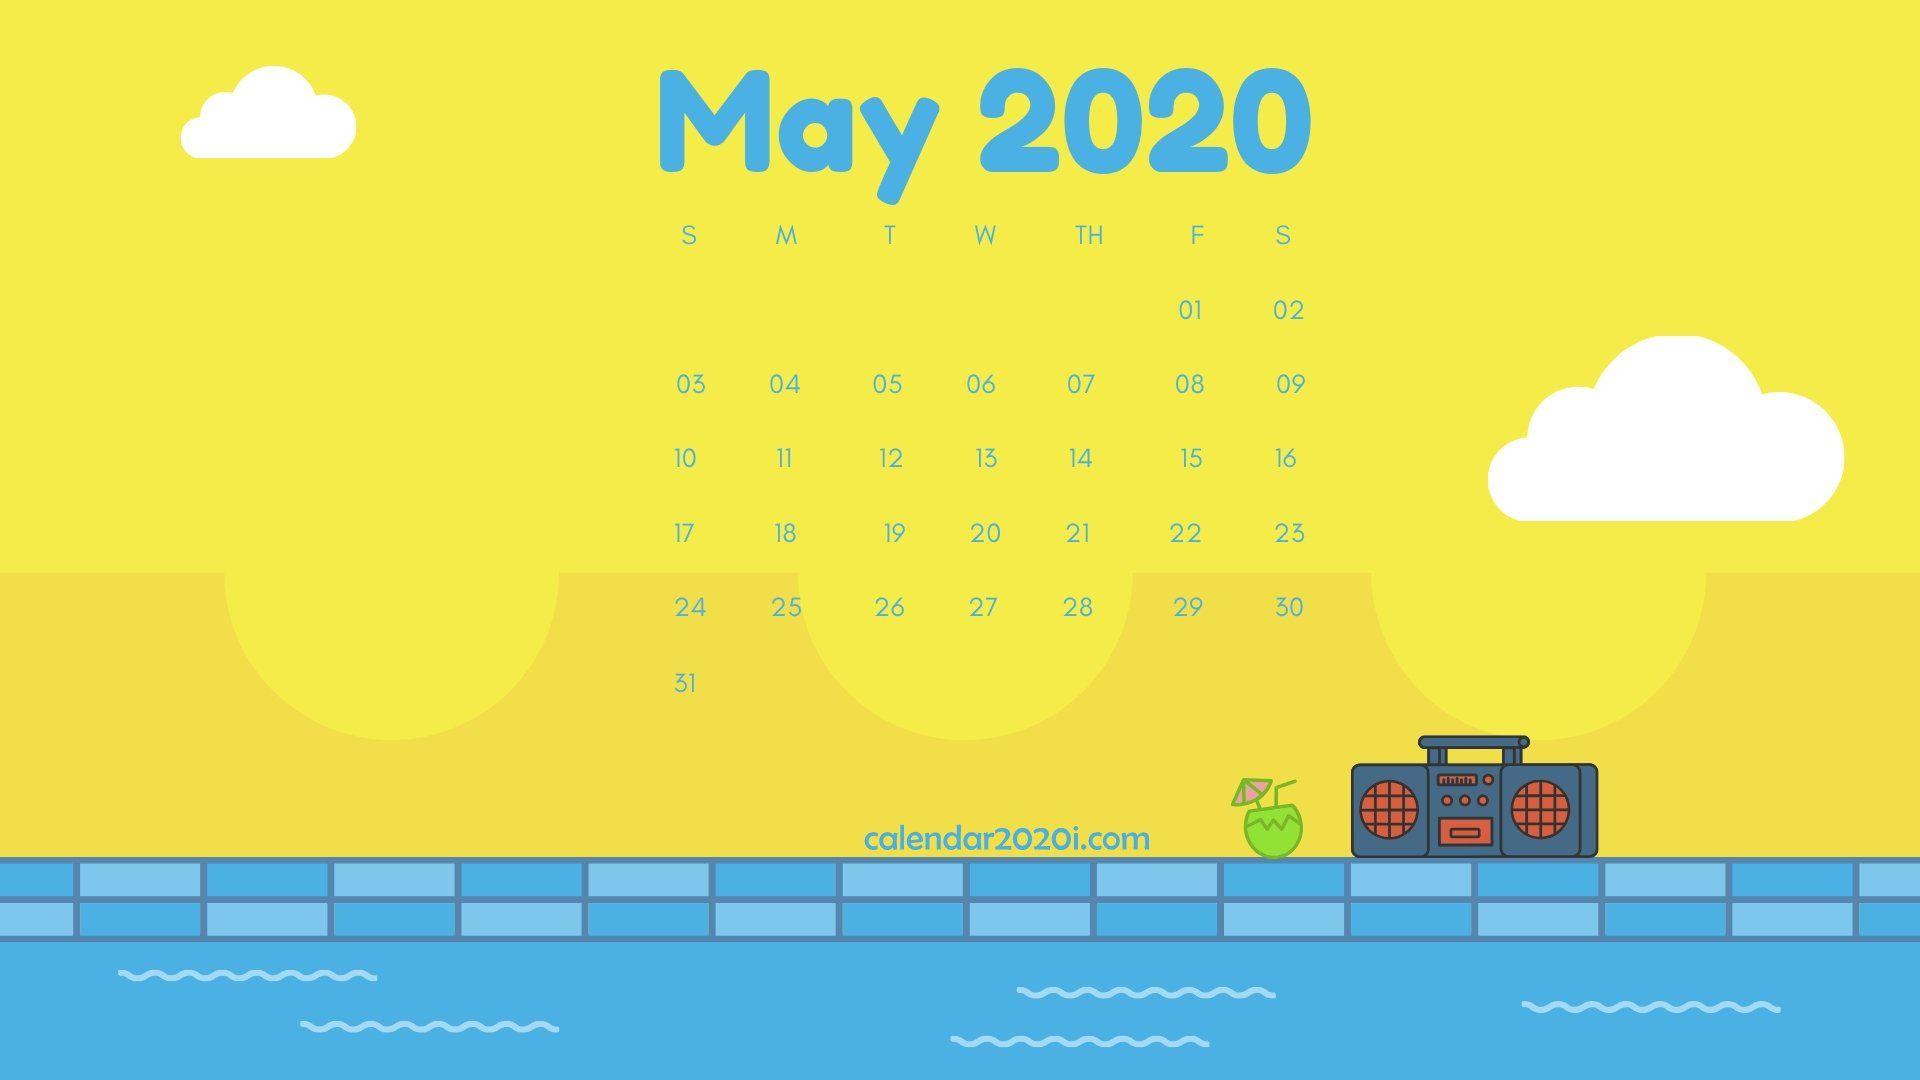 May 2020 Calendar Desktop Wallpaper. Calendar 2020